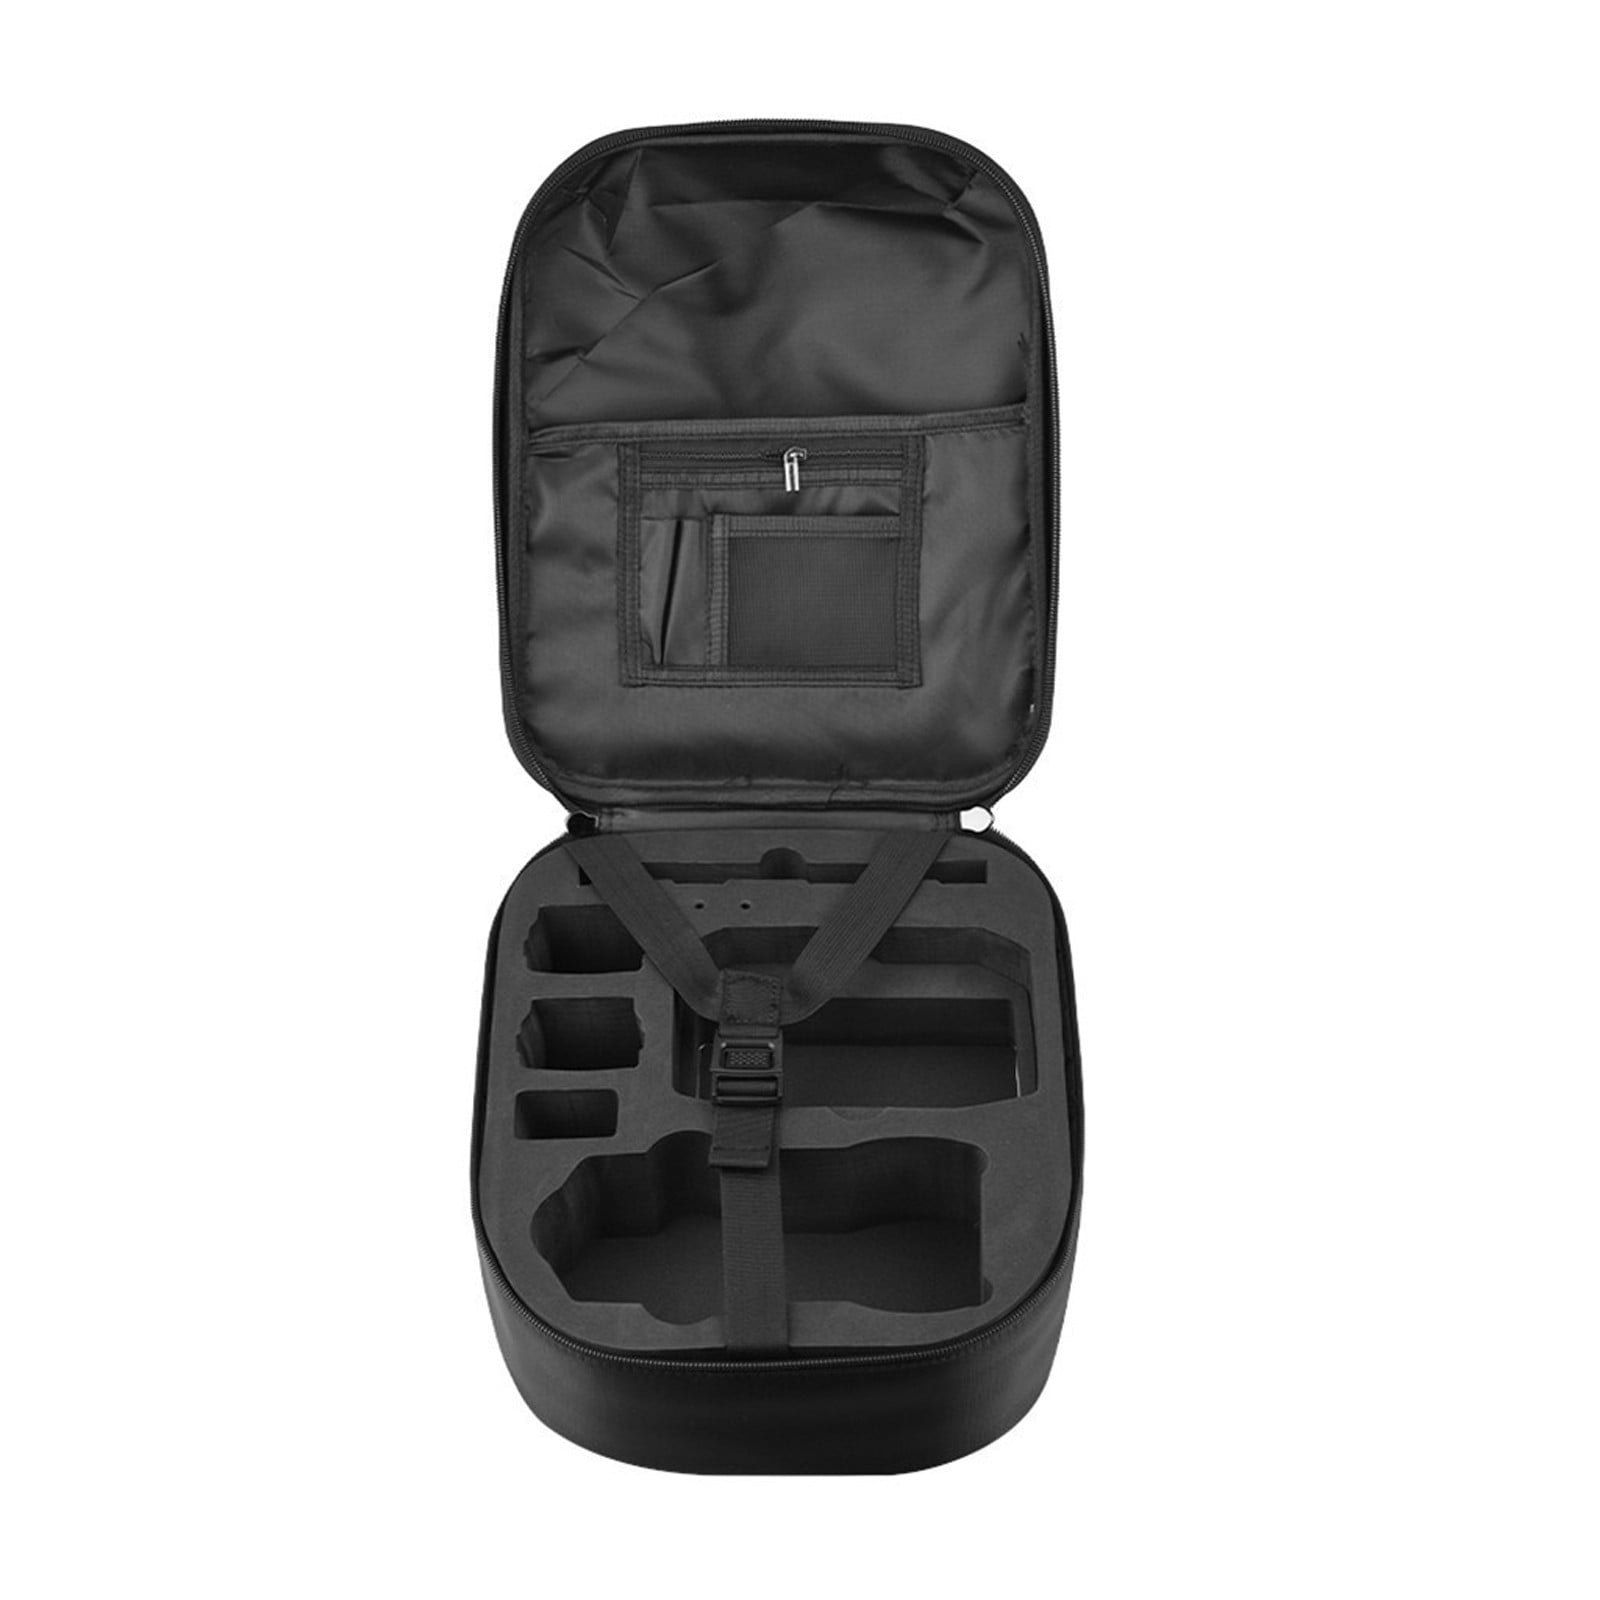 Air 2S Portable Shockproof Storage Bag ZHANSANFM Hard Shell Carrying Case Bag Waterproof Backpack for DJI Mavic Air 2 